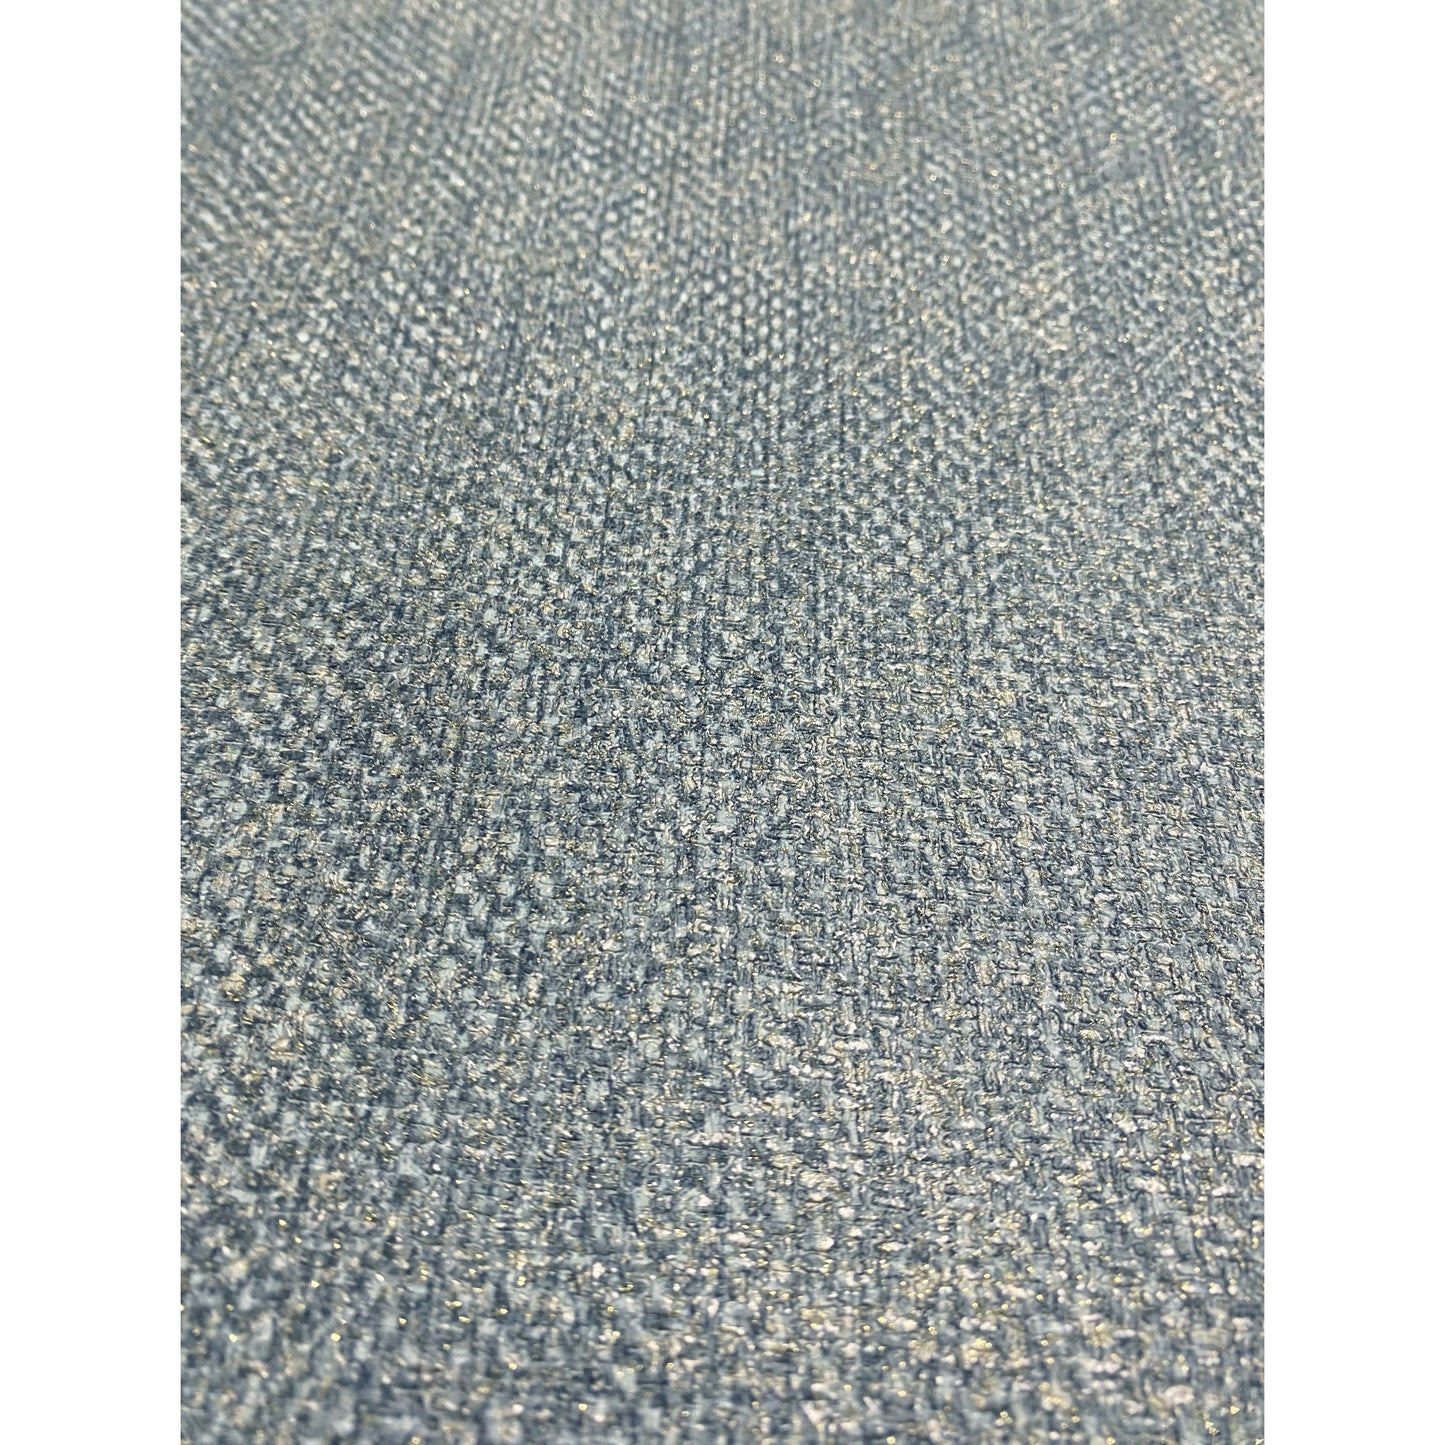 Muriva Venezia Texture Blue Wallpaper (M67301)